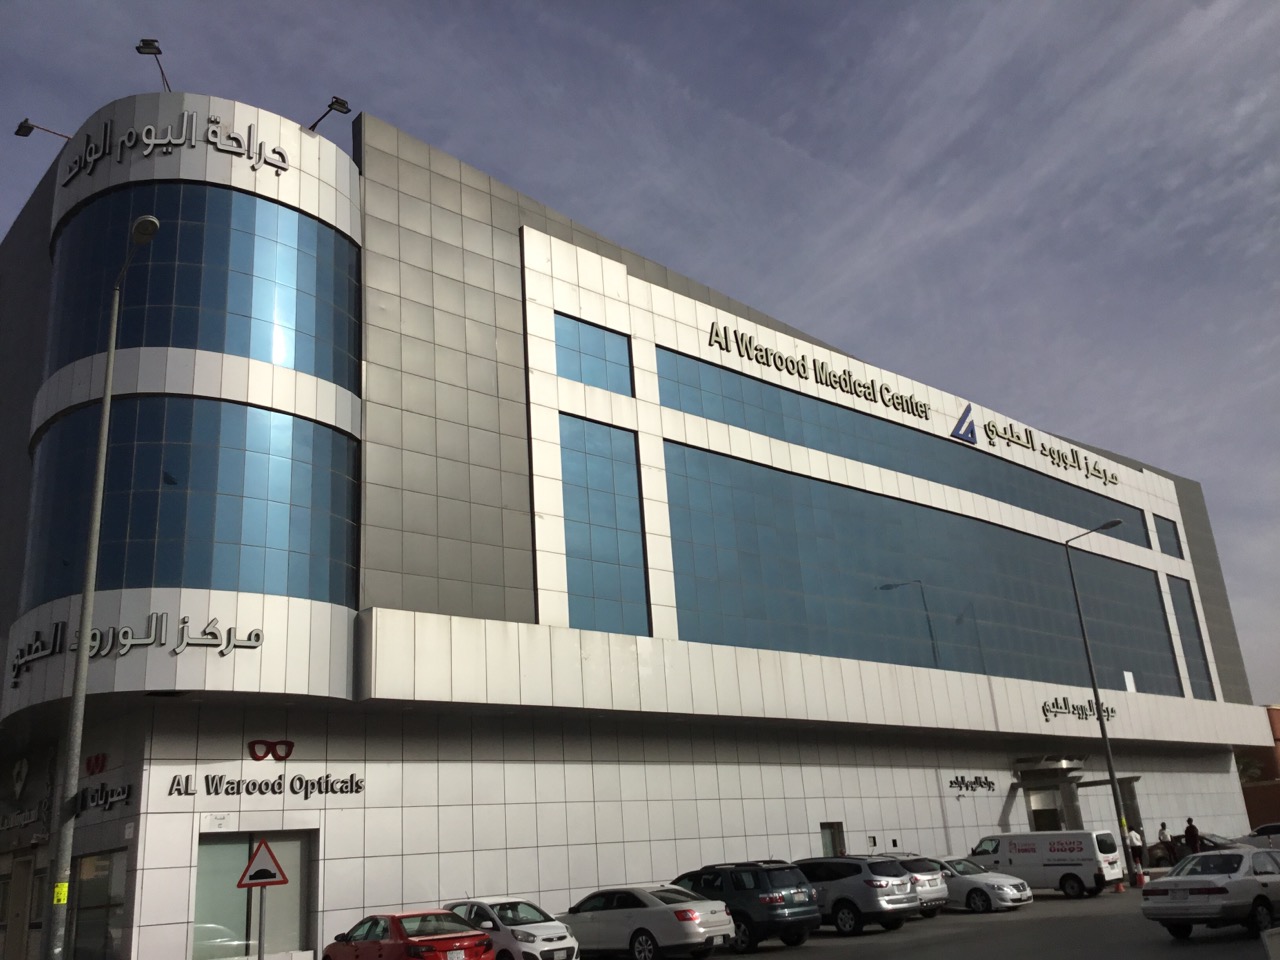 al-warood medical center